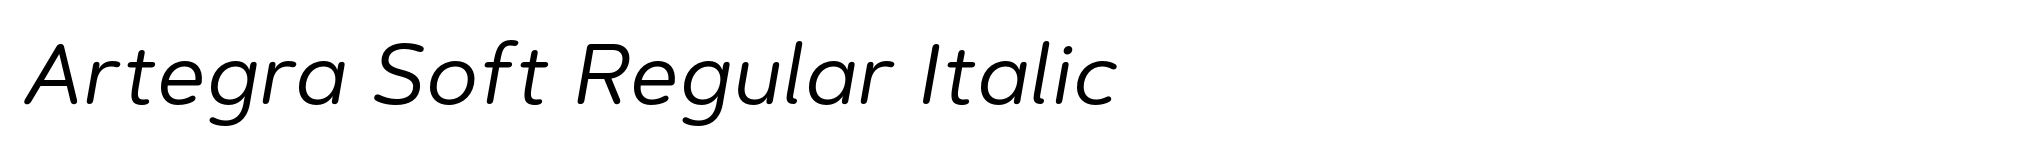 Artegra Soft Regular Italic image